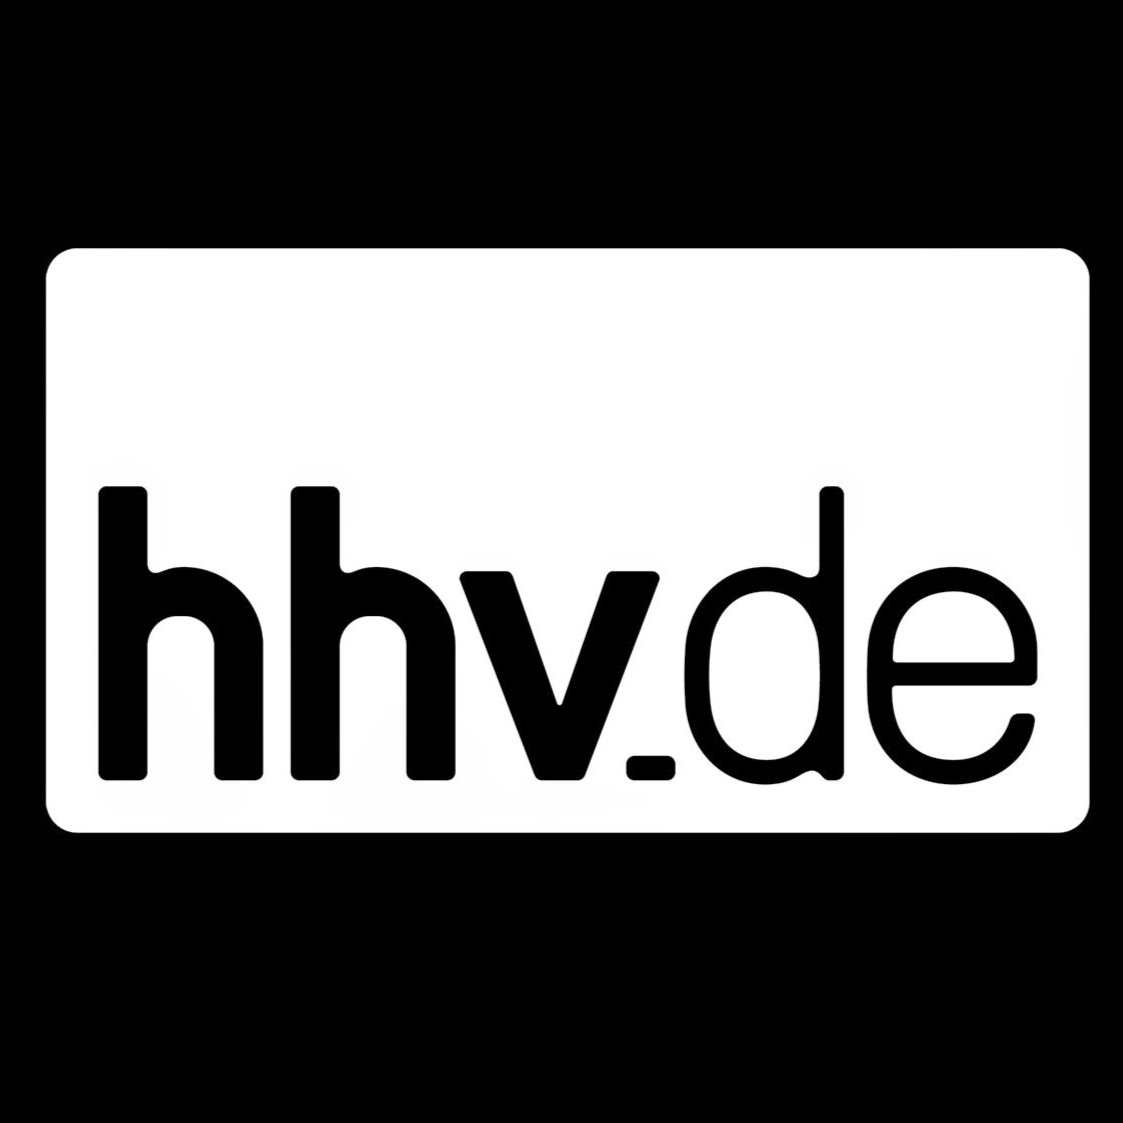 HHV - Vinyl / Streetwear / Sneakers & more Voucher Codes